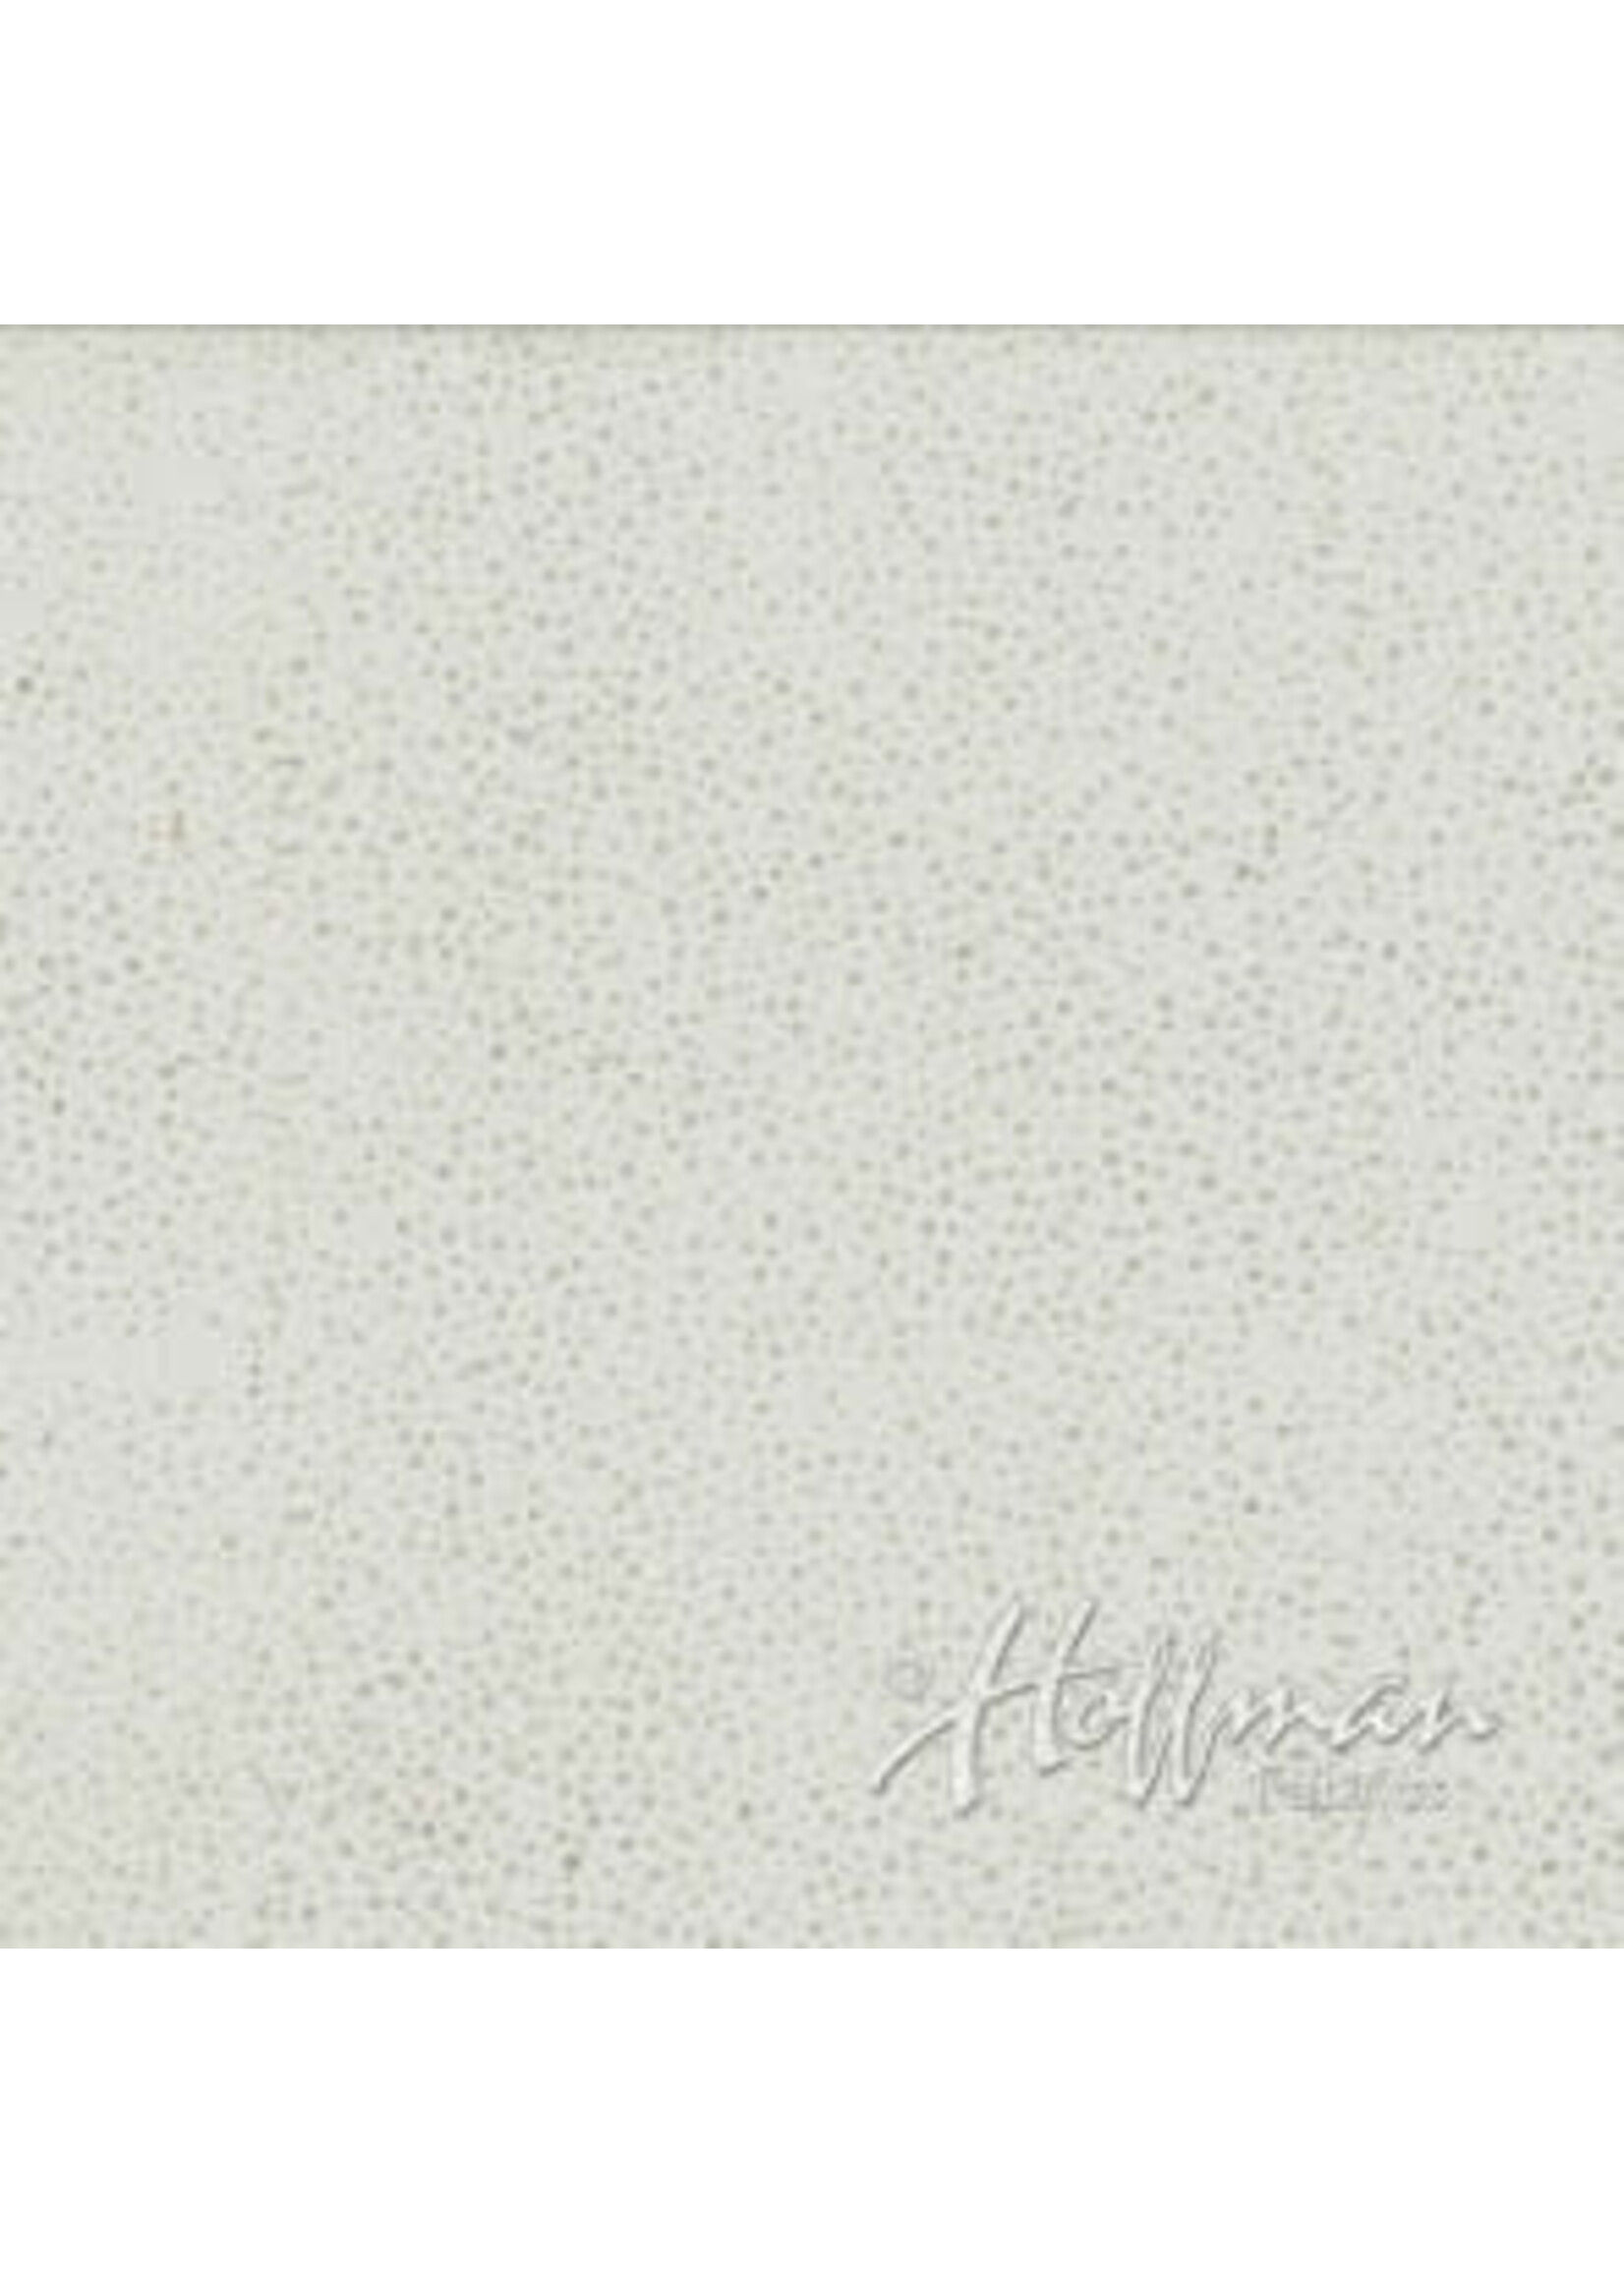 Hoffman Fabrics Bali Dots - Grey - 3019-189